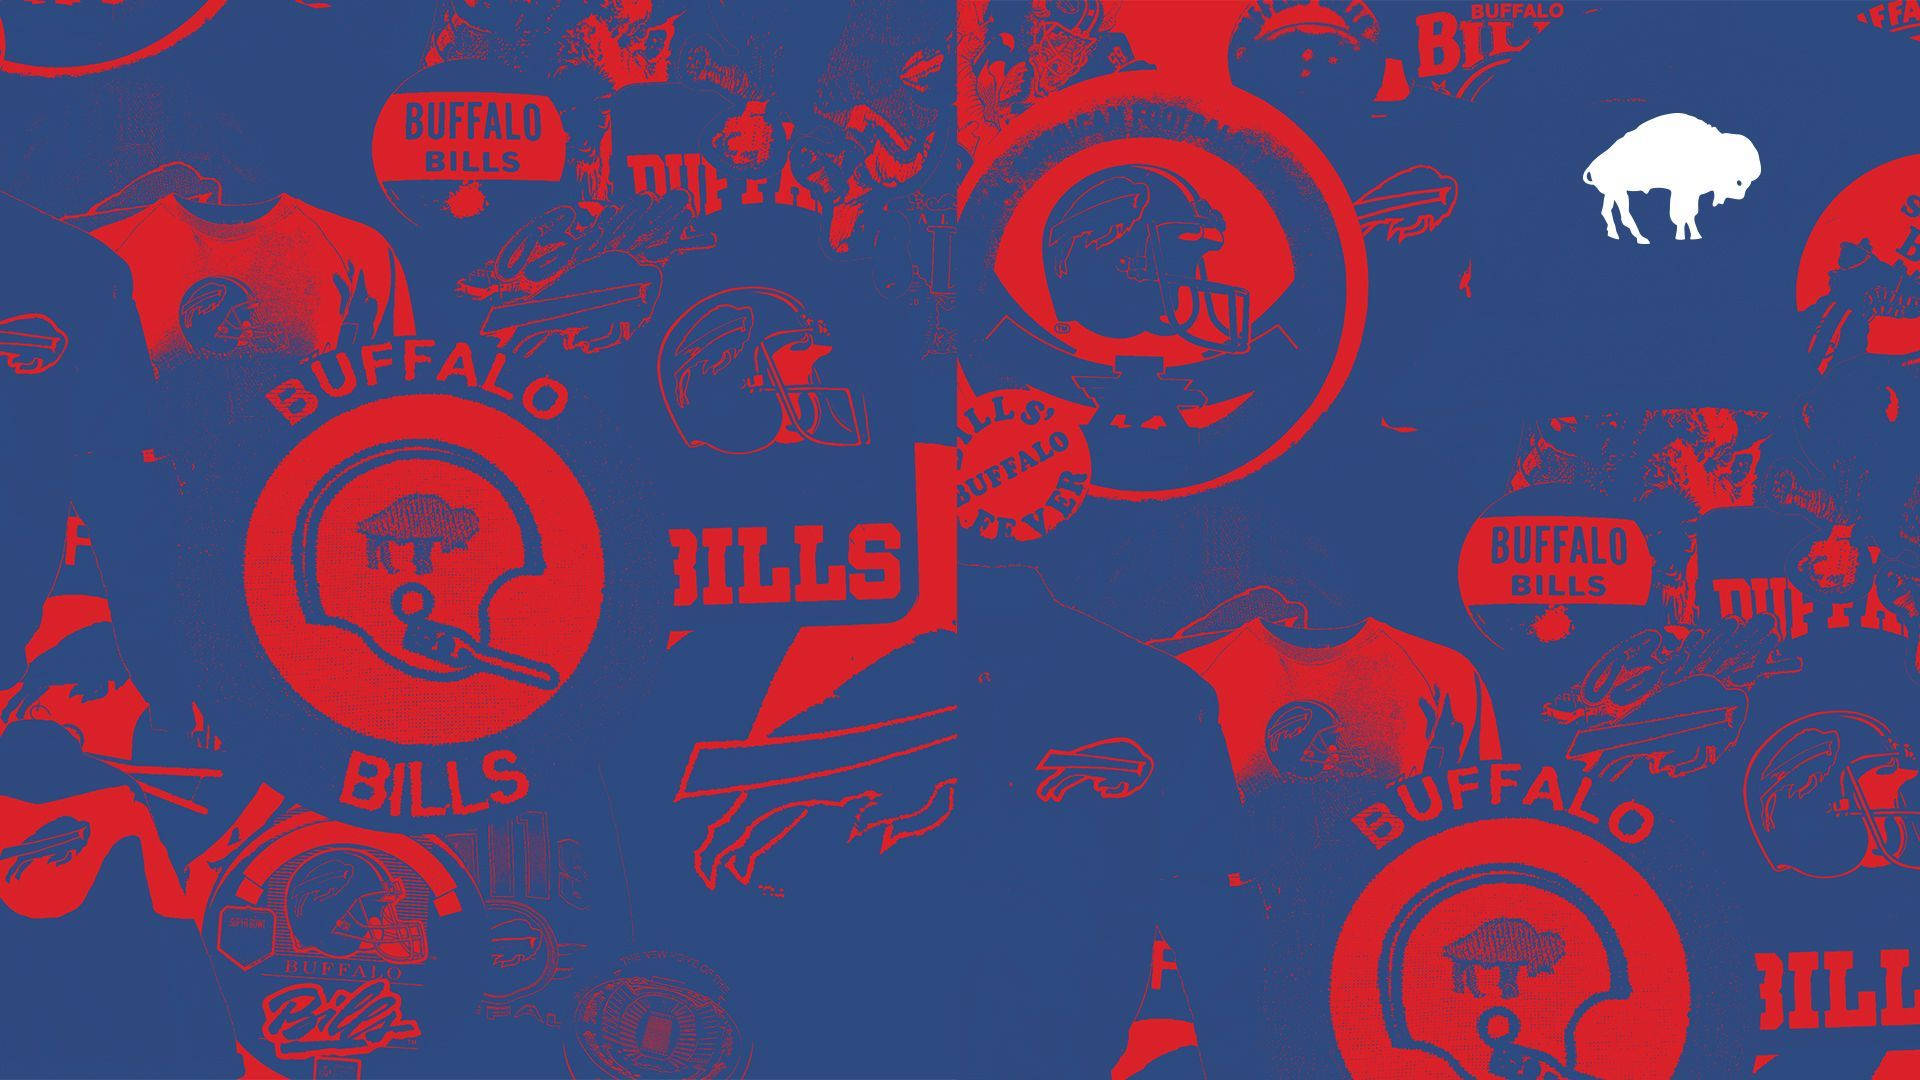 Buffalo Bills 1920X1080 Wallpaper and Background Image